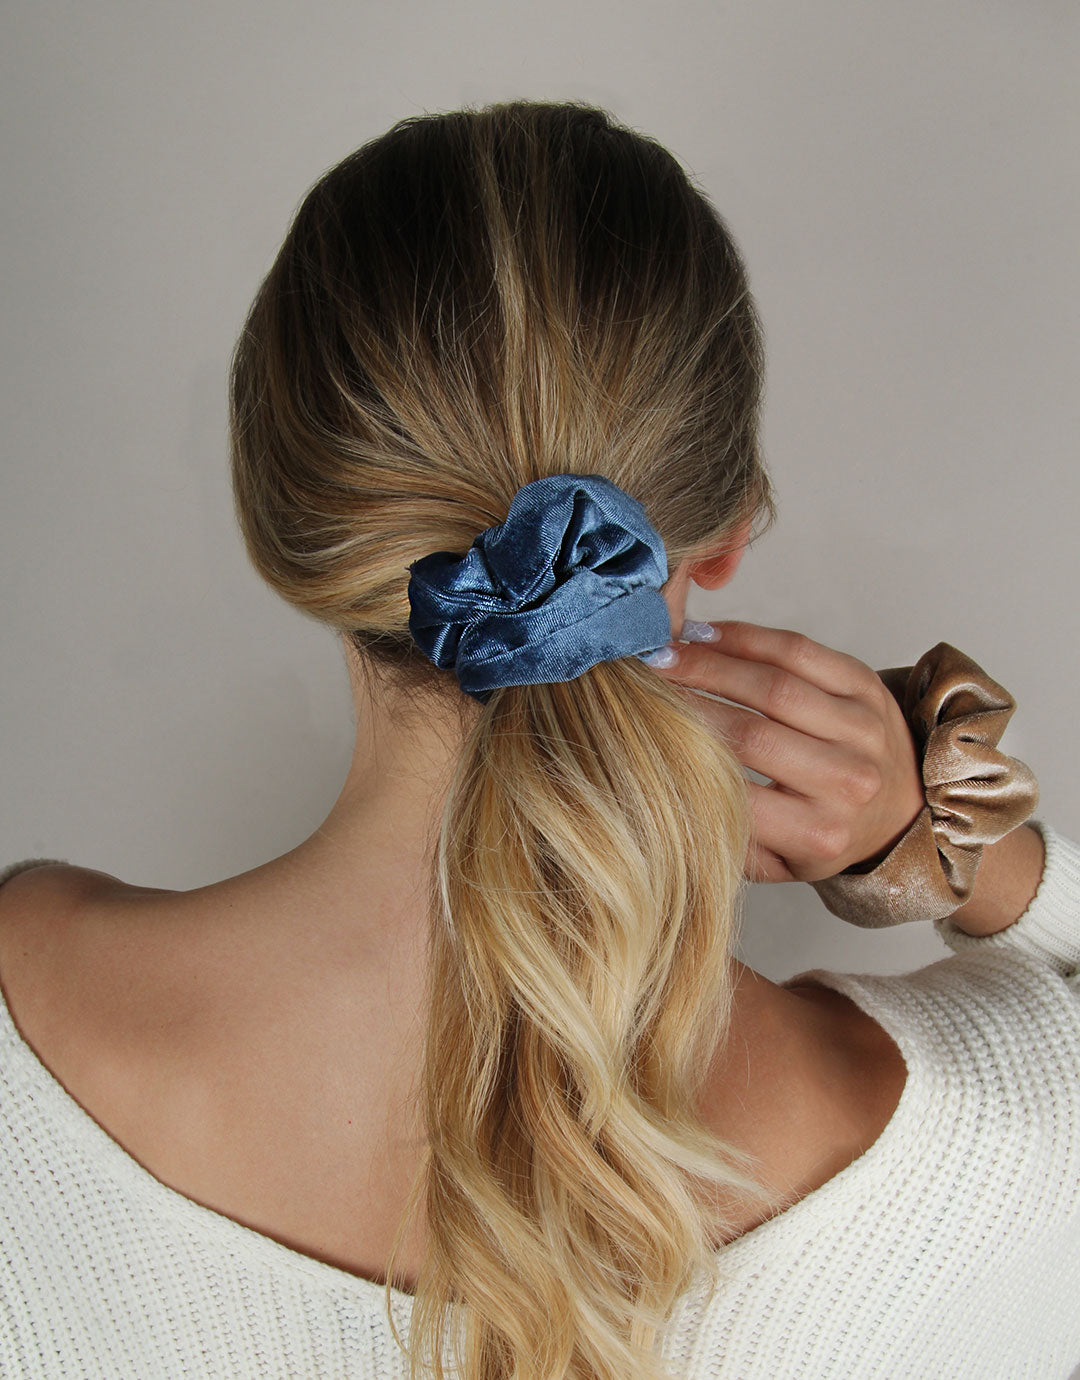 BANDED Women’s Premium Hair Accessories - Blue Jean - 2 Pack Luxe Velvet Scrunchies